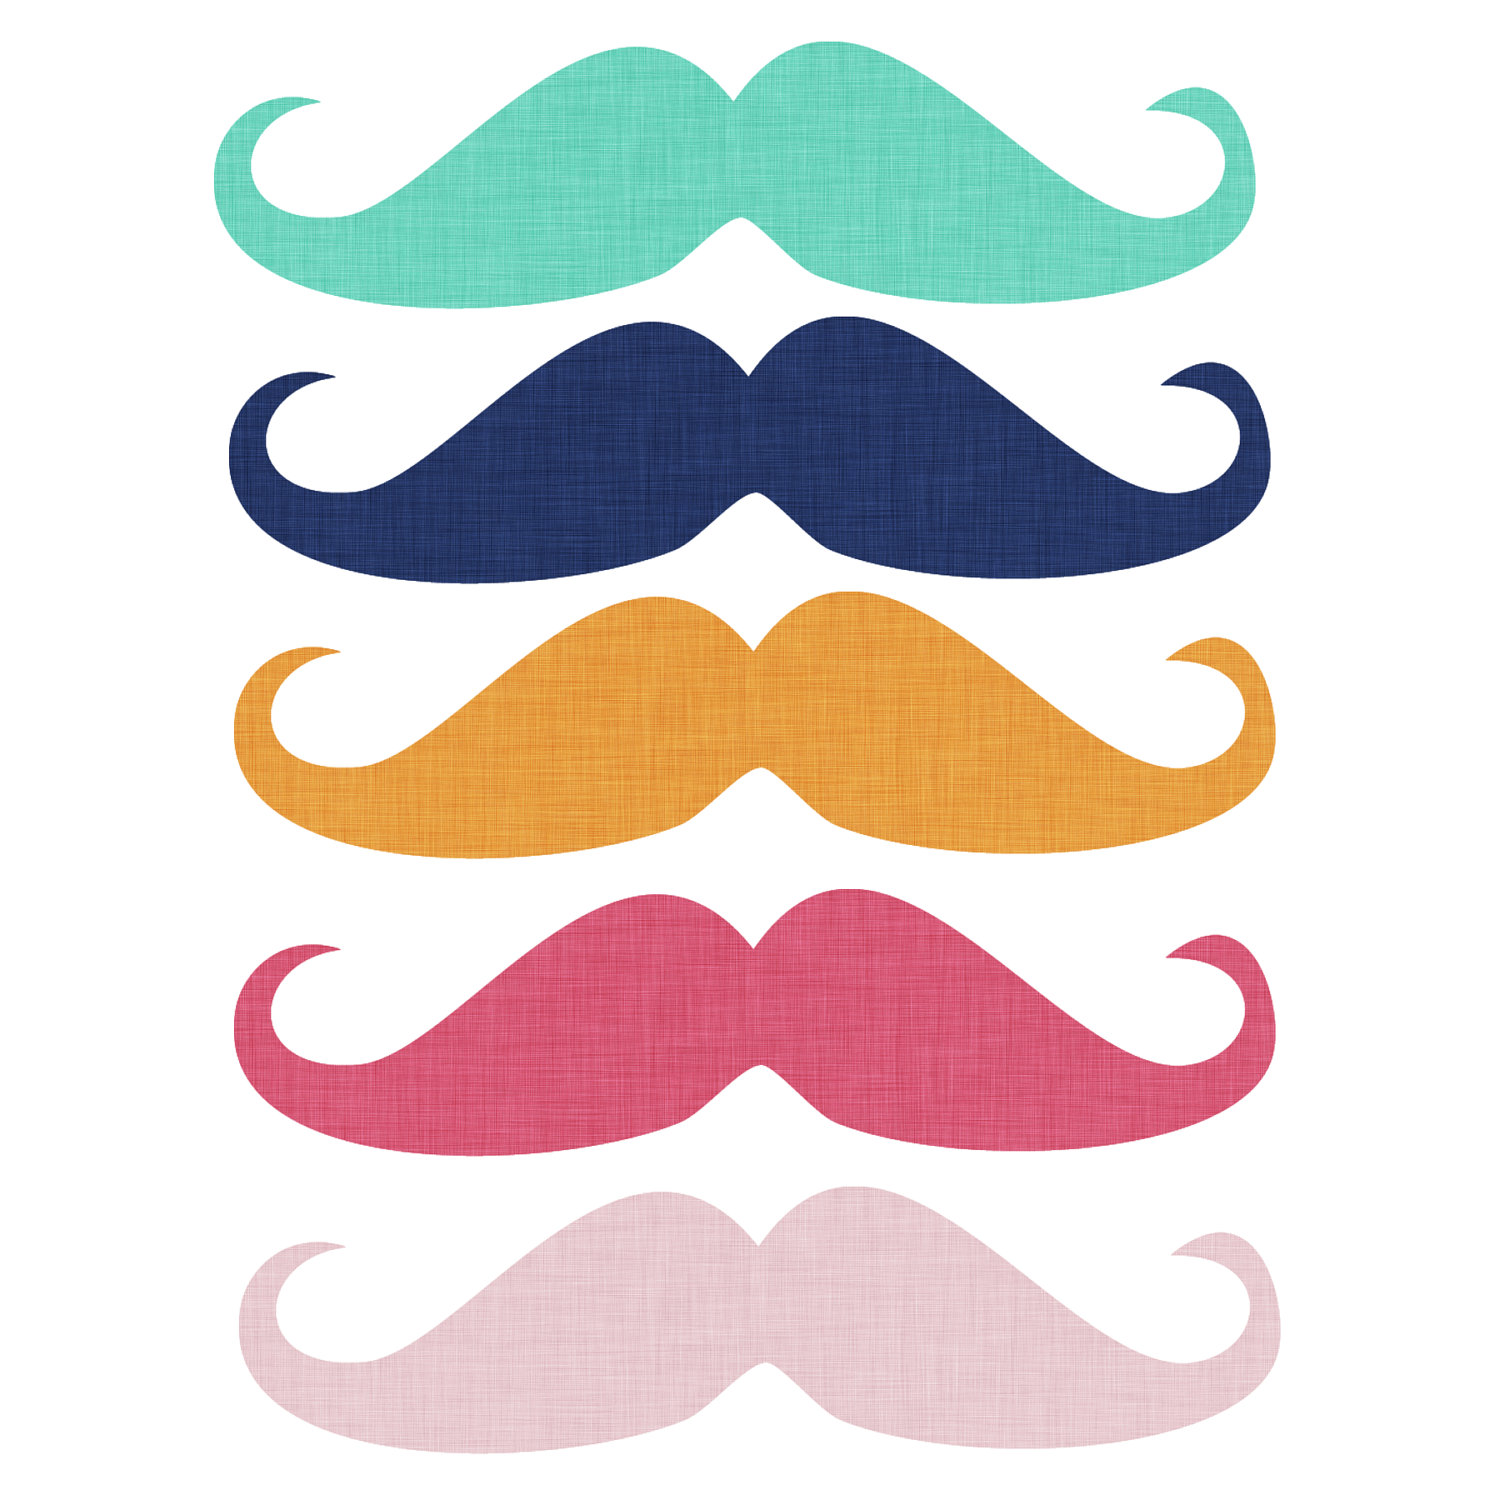 Popular items for digital moustache on Etsy